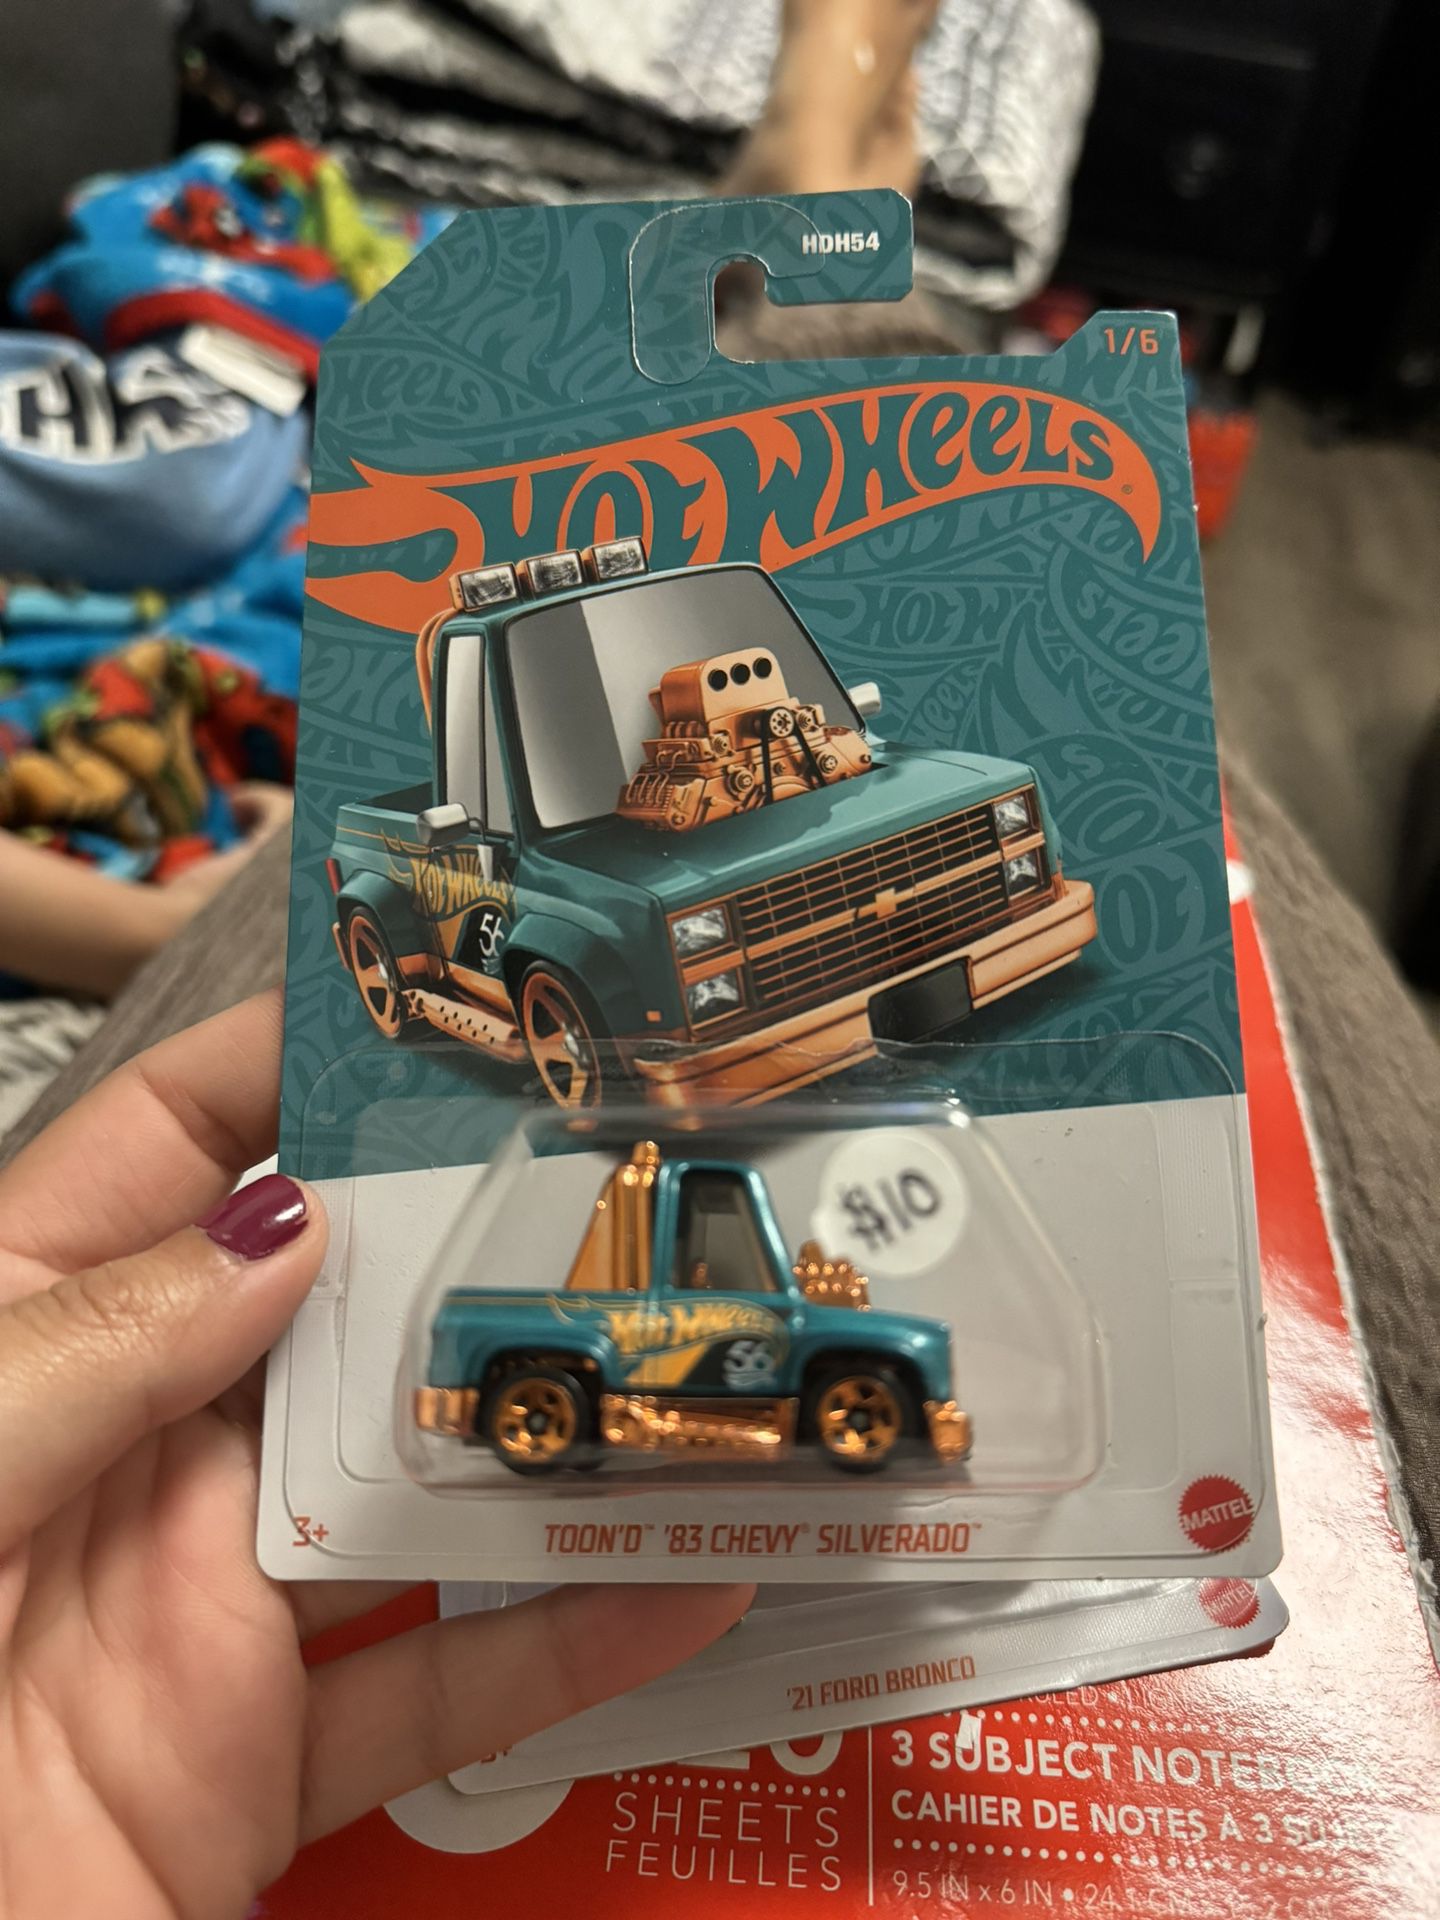 Toon’d ‘83 Chevy Silverado Hotwheel